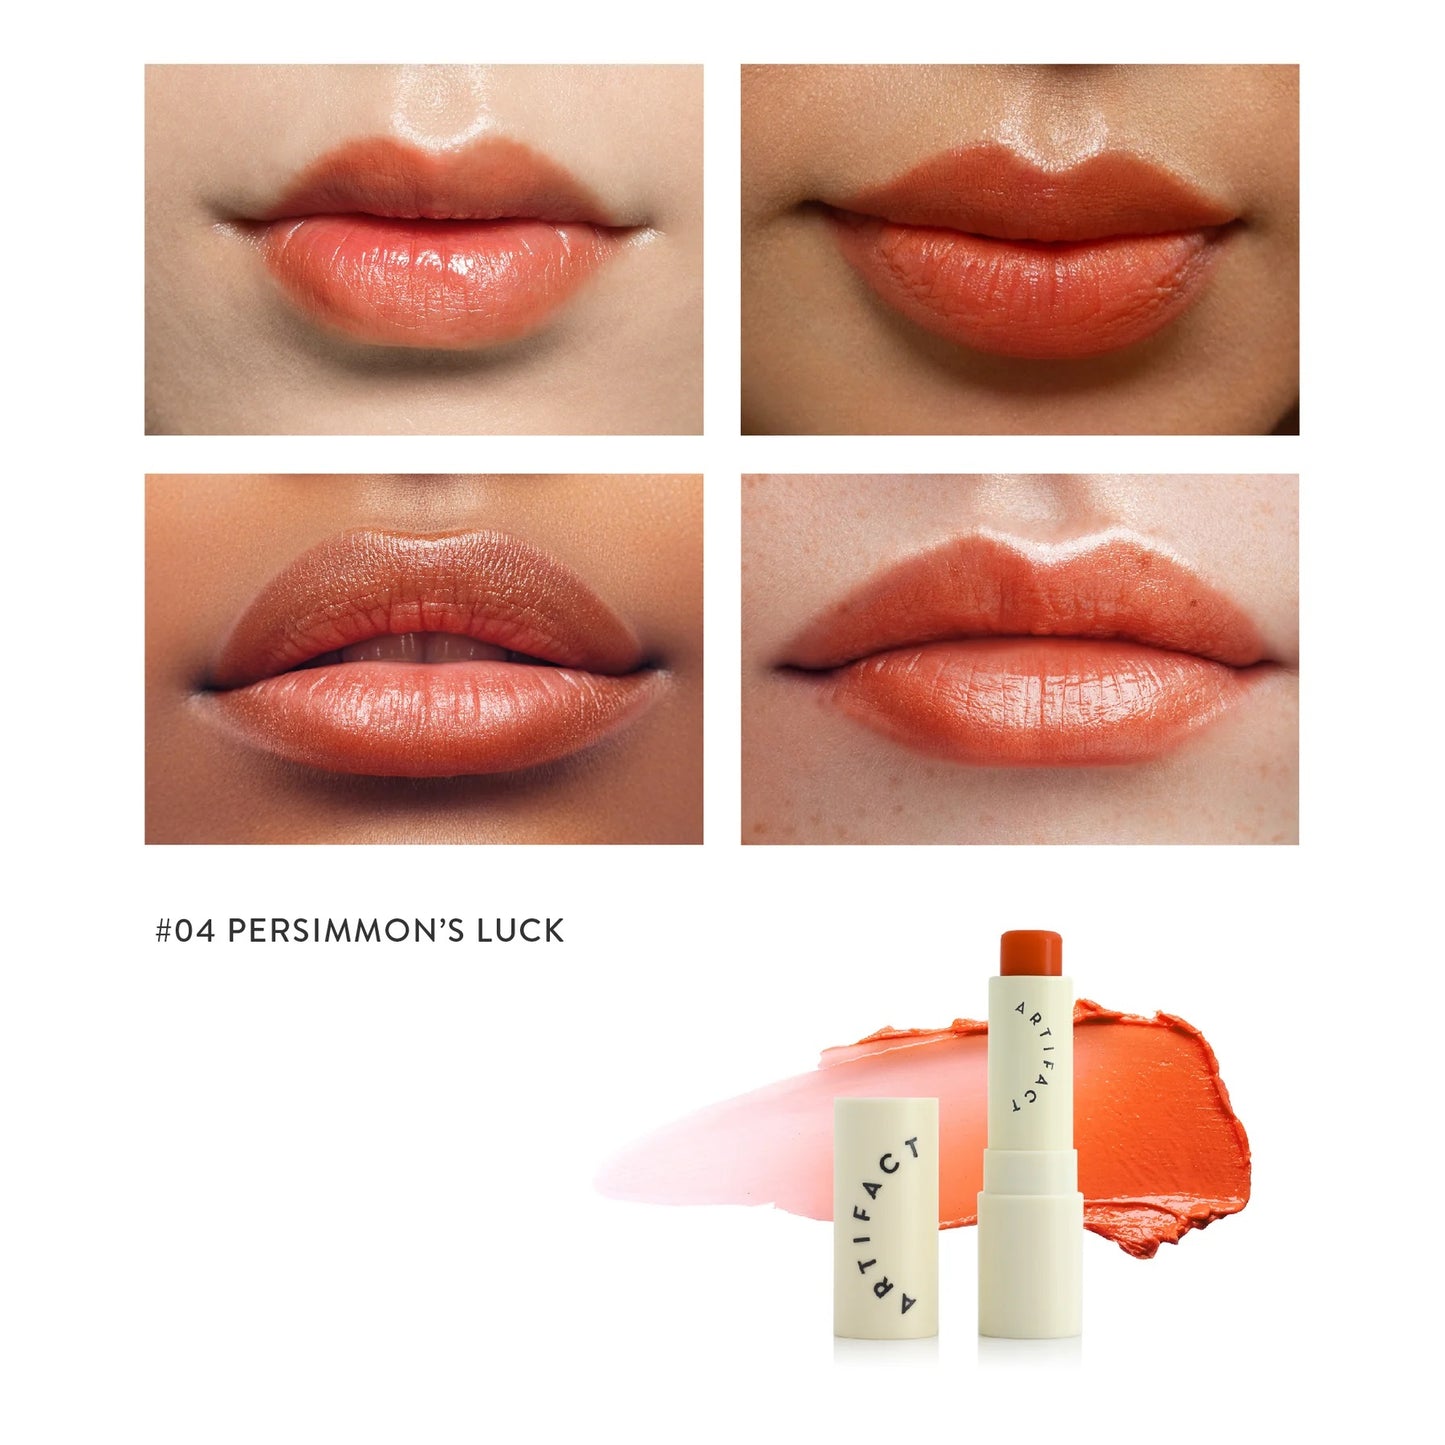 ARTIFACT Soft Sail Blurring Tinted Lip Balm #04 persimmon's luck